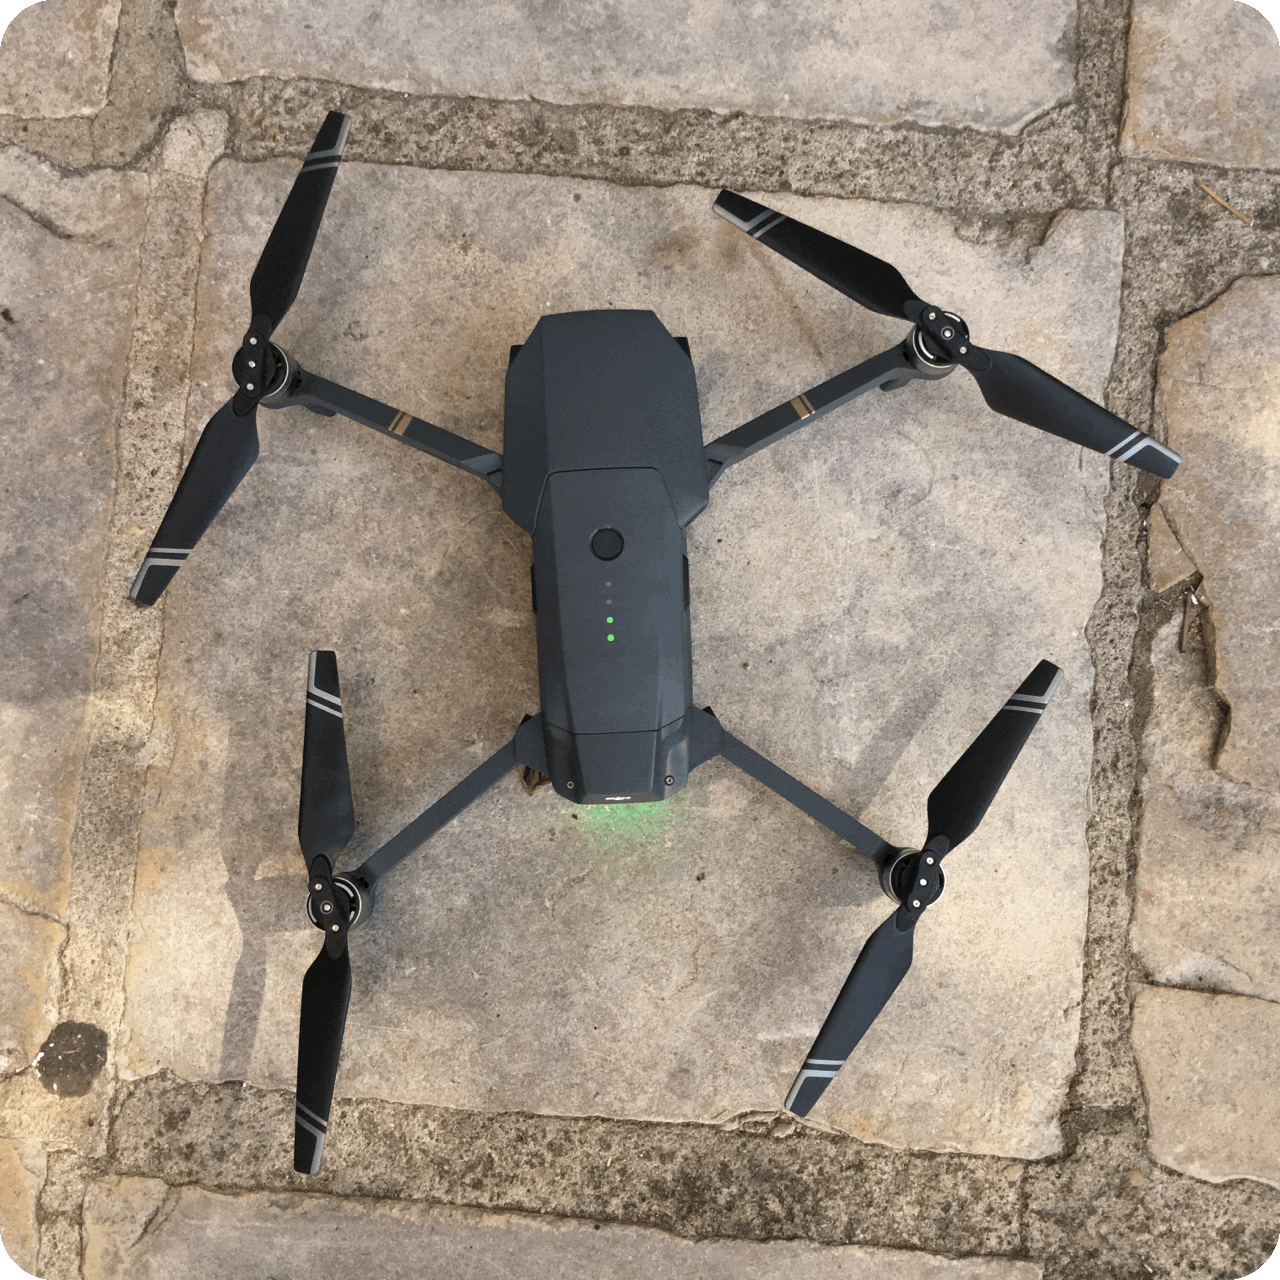 Le drone pliable DJI Mavic Pro, 10 2016, Ph. Moctar KANE.